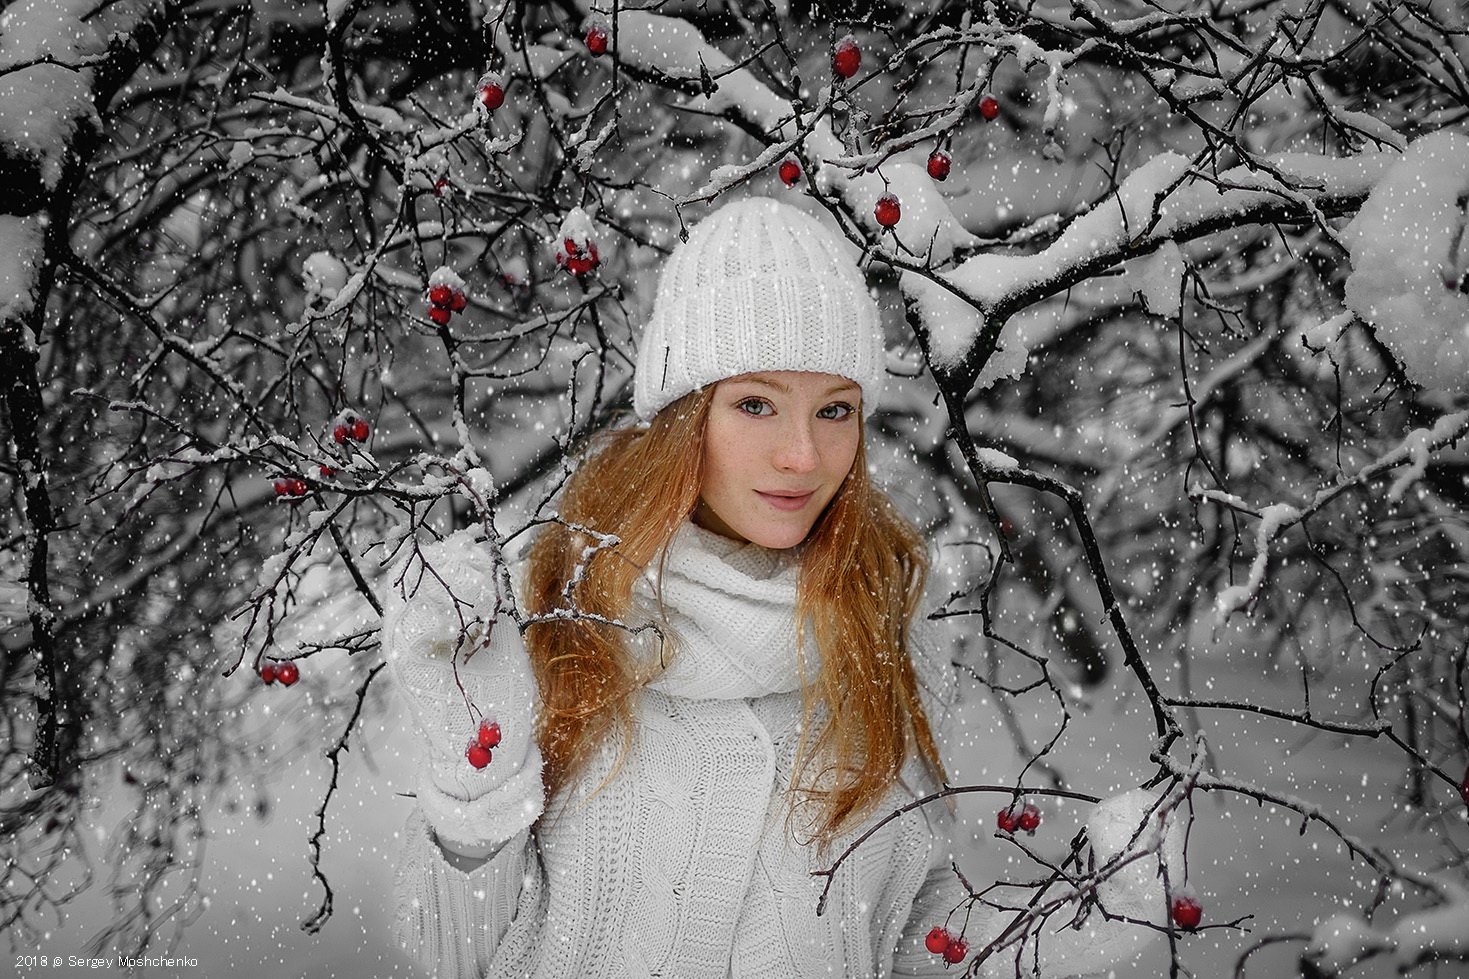 #beauty #portrait #girl #winter #fairytale, Мощенко Сергей